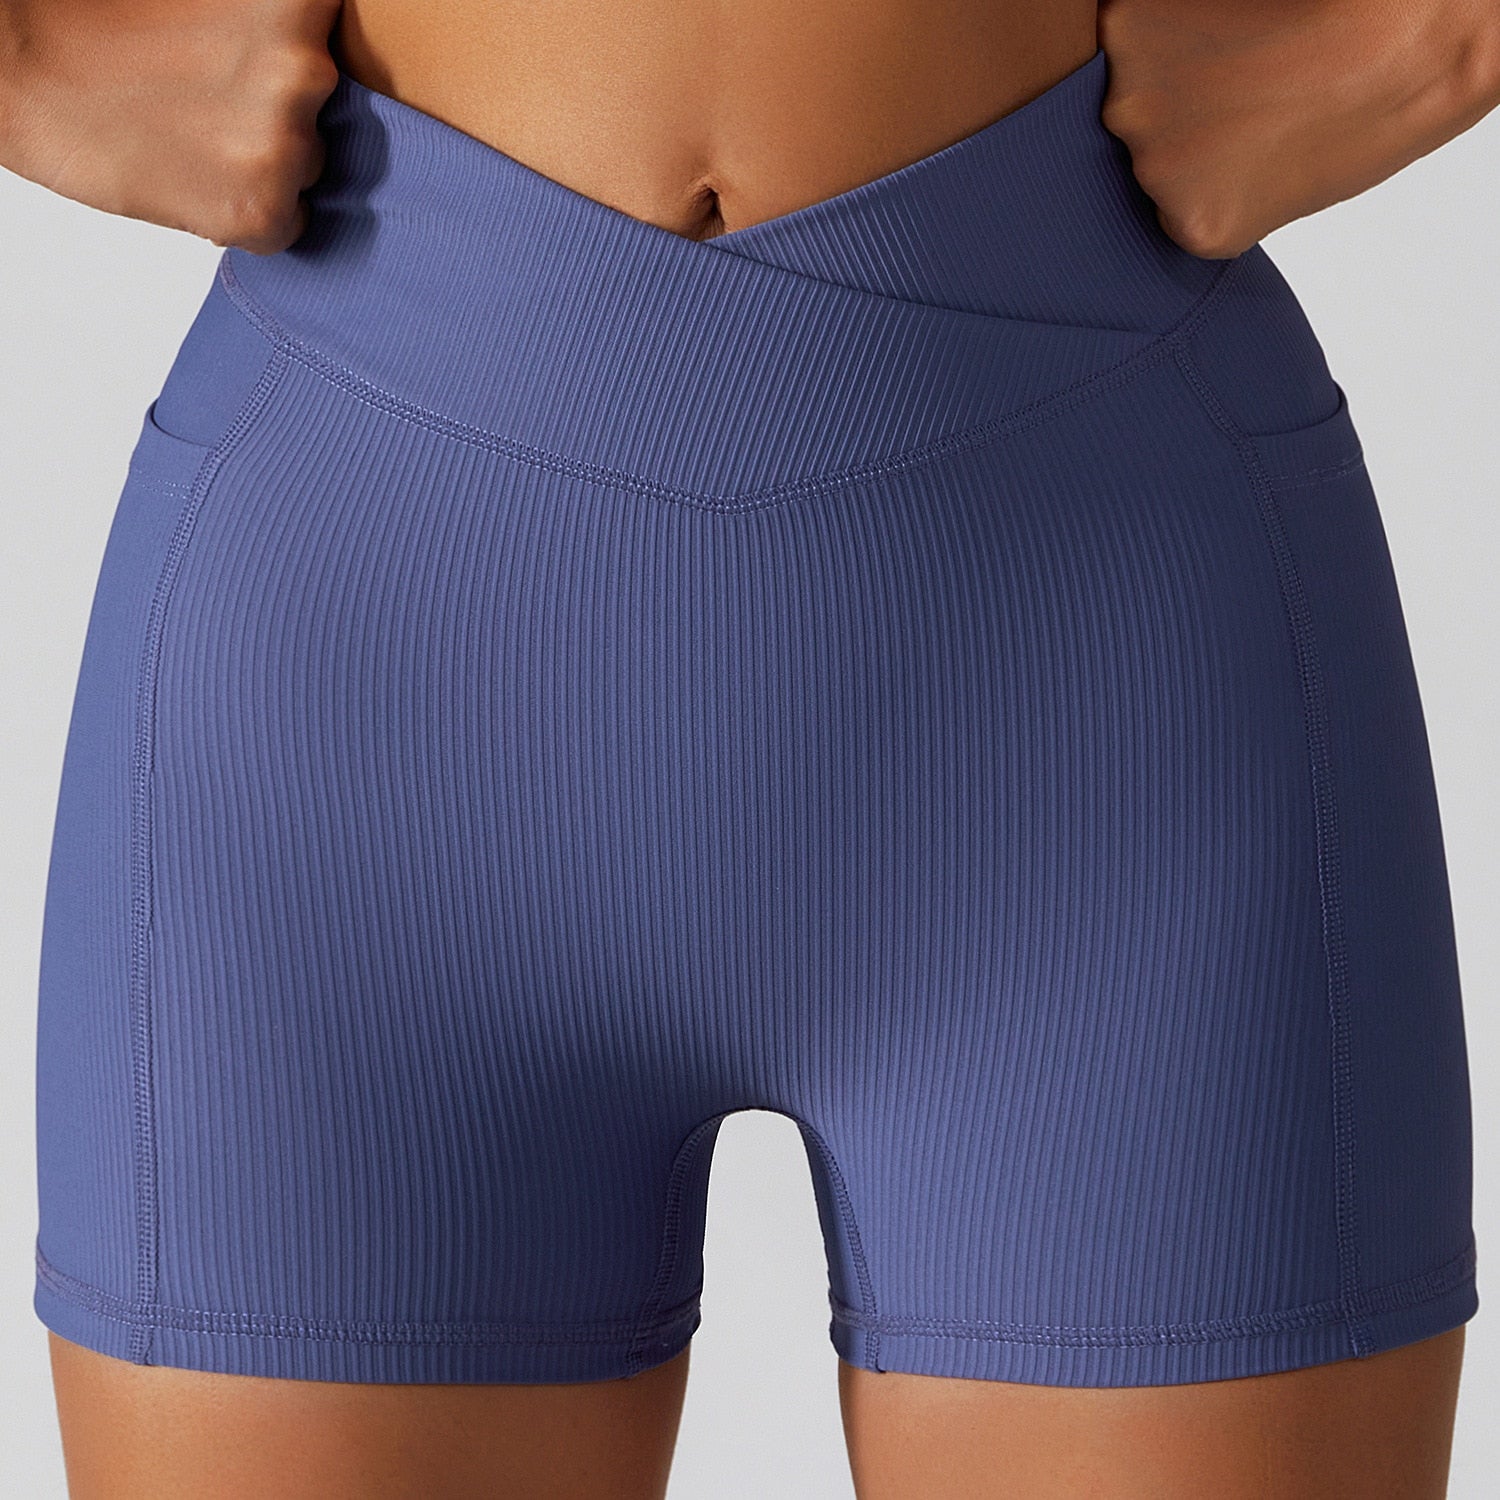 Women Gym Crop Top Bra Shorts shorts 1pcs 5